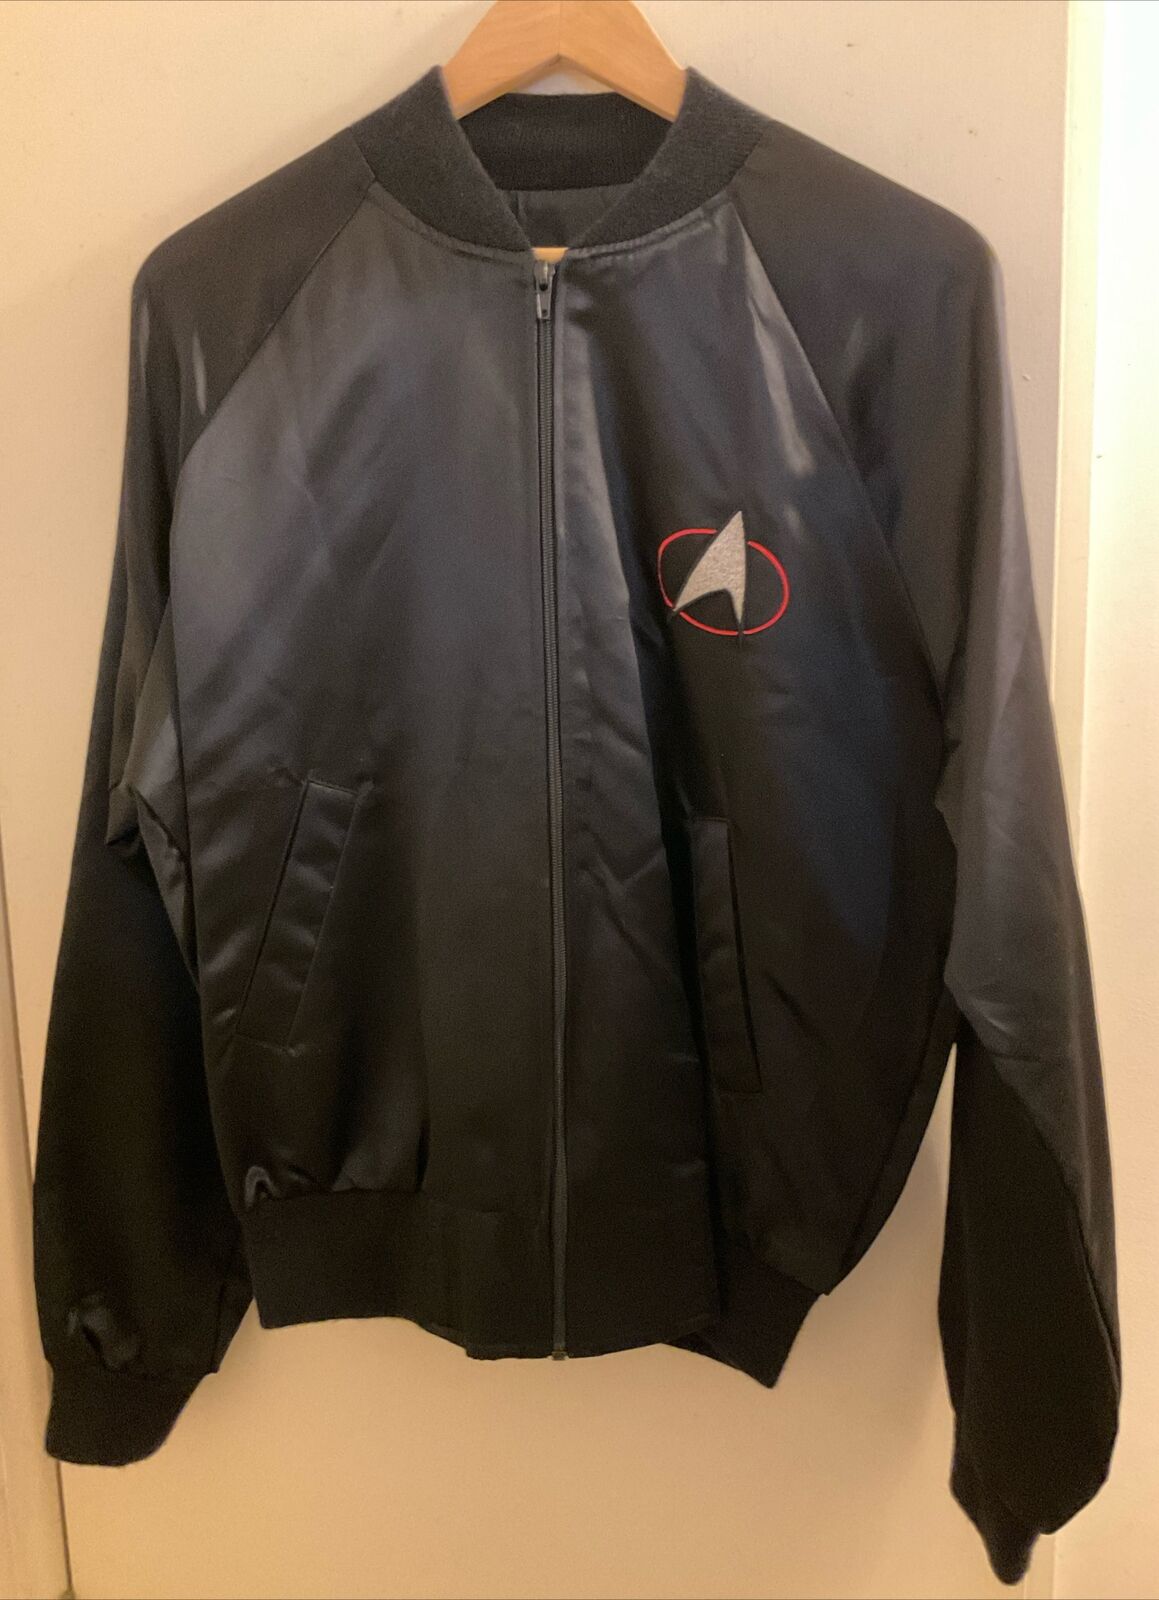 VTG Star Trek The Next Generation Black Jacket Sz S Embroidered Logo and Badge